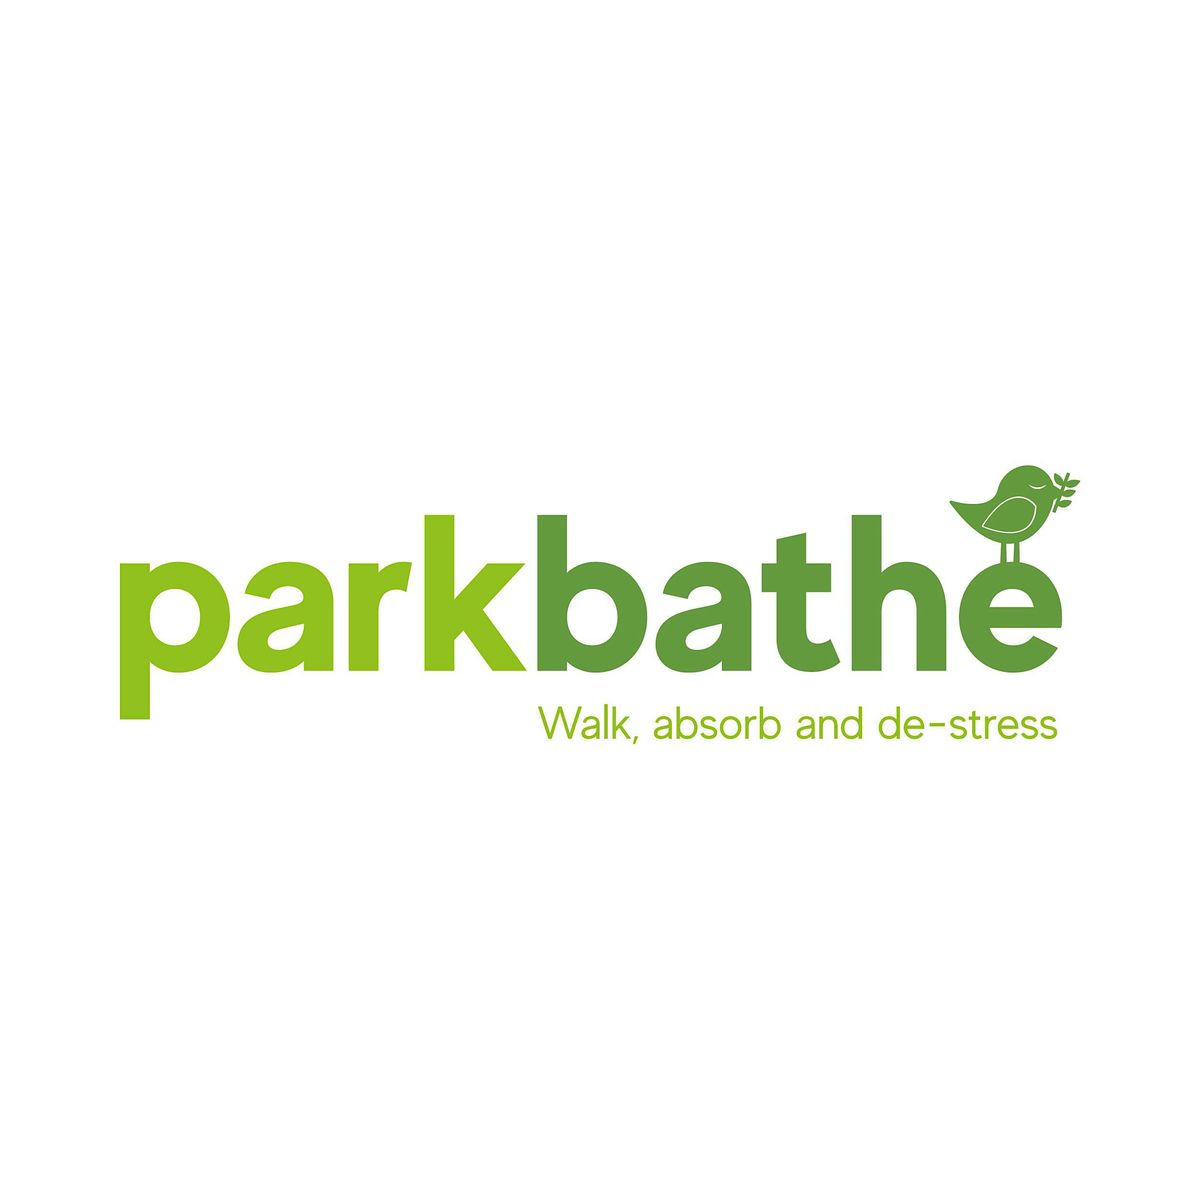 ParkBathe stroll in Crystal Palace Park.